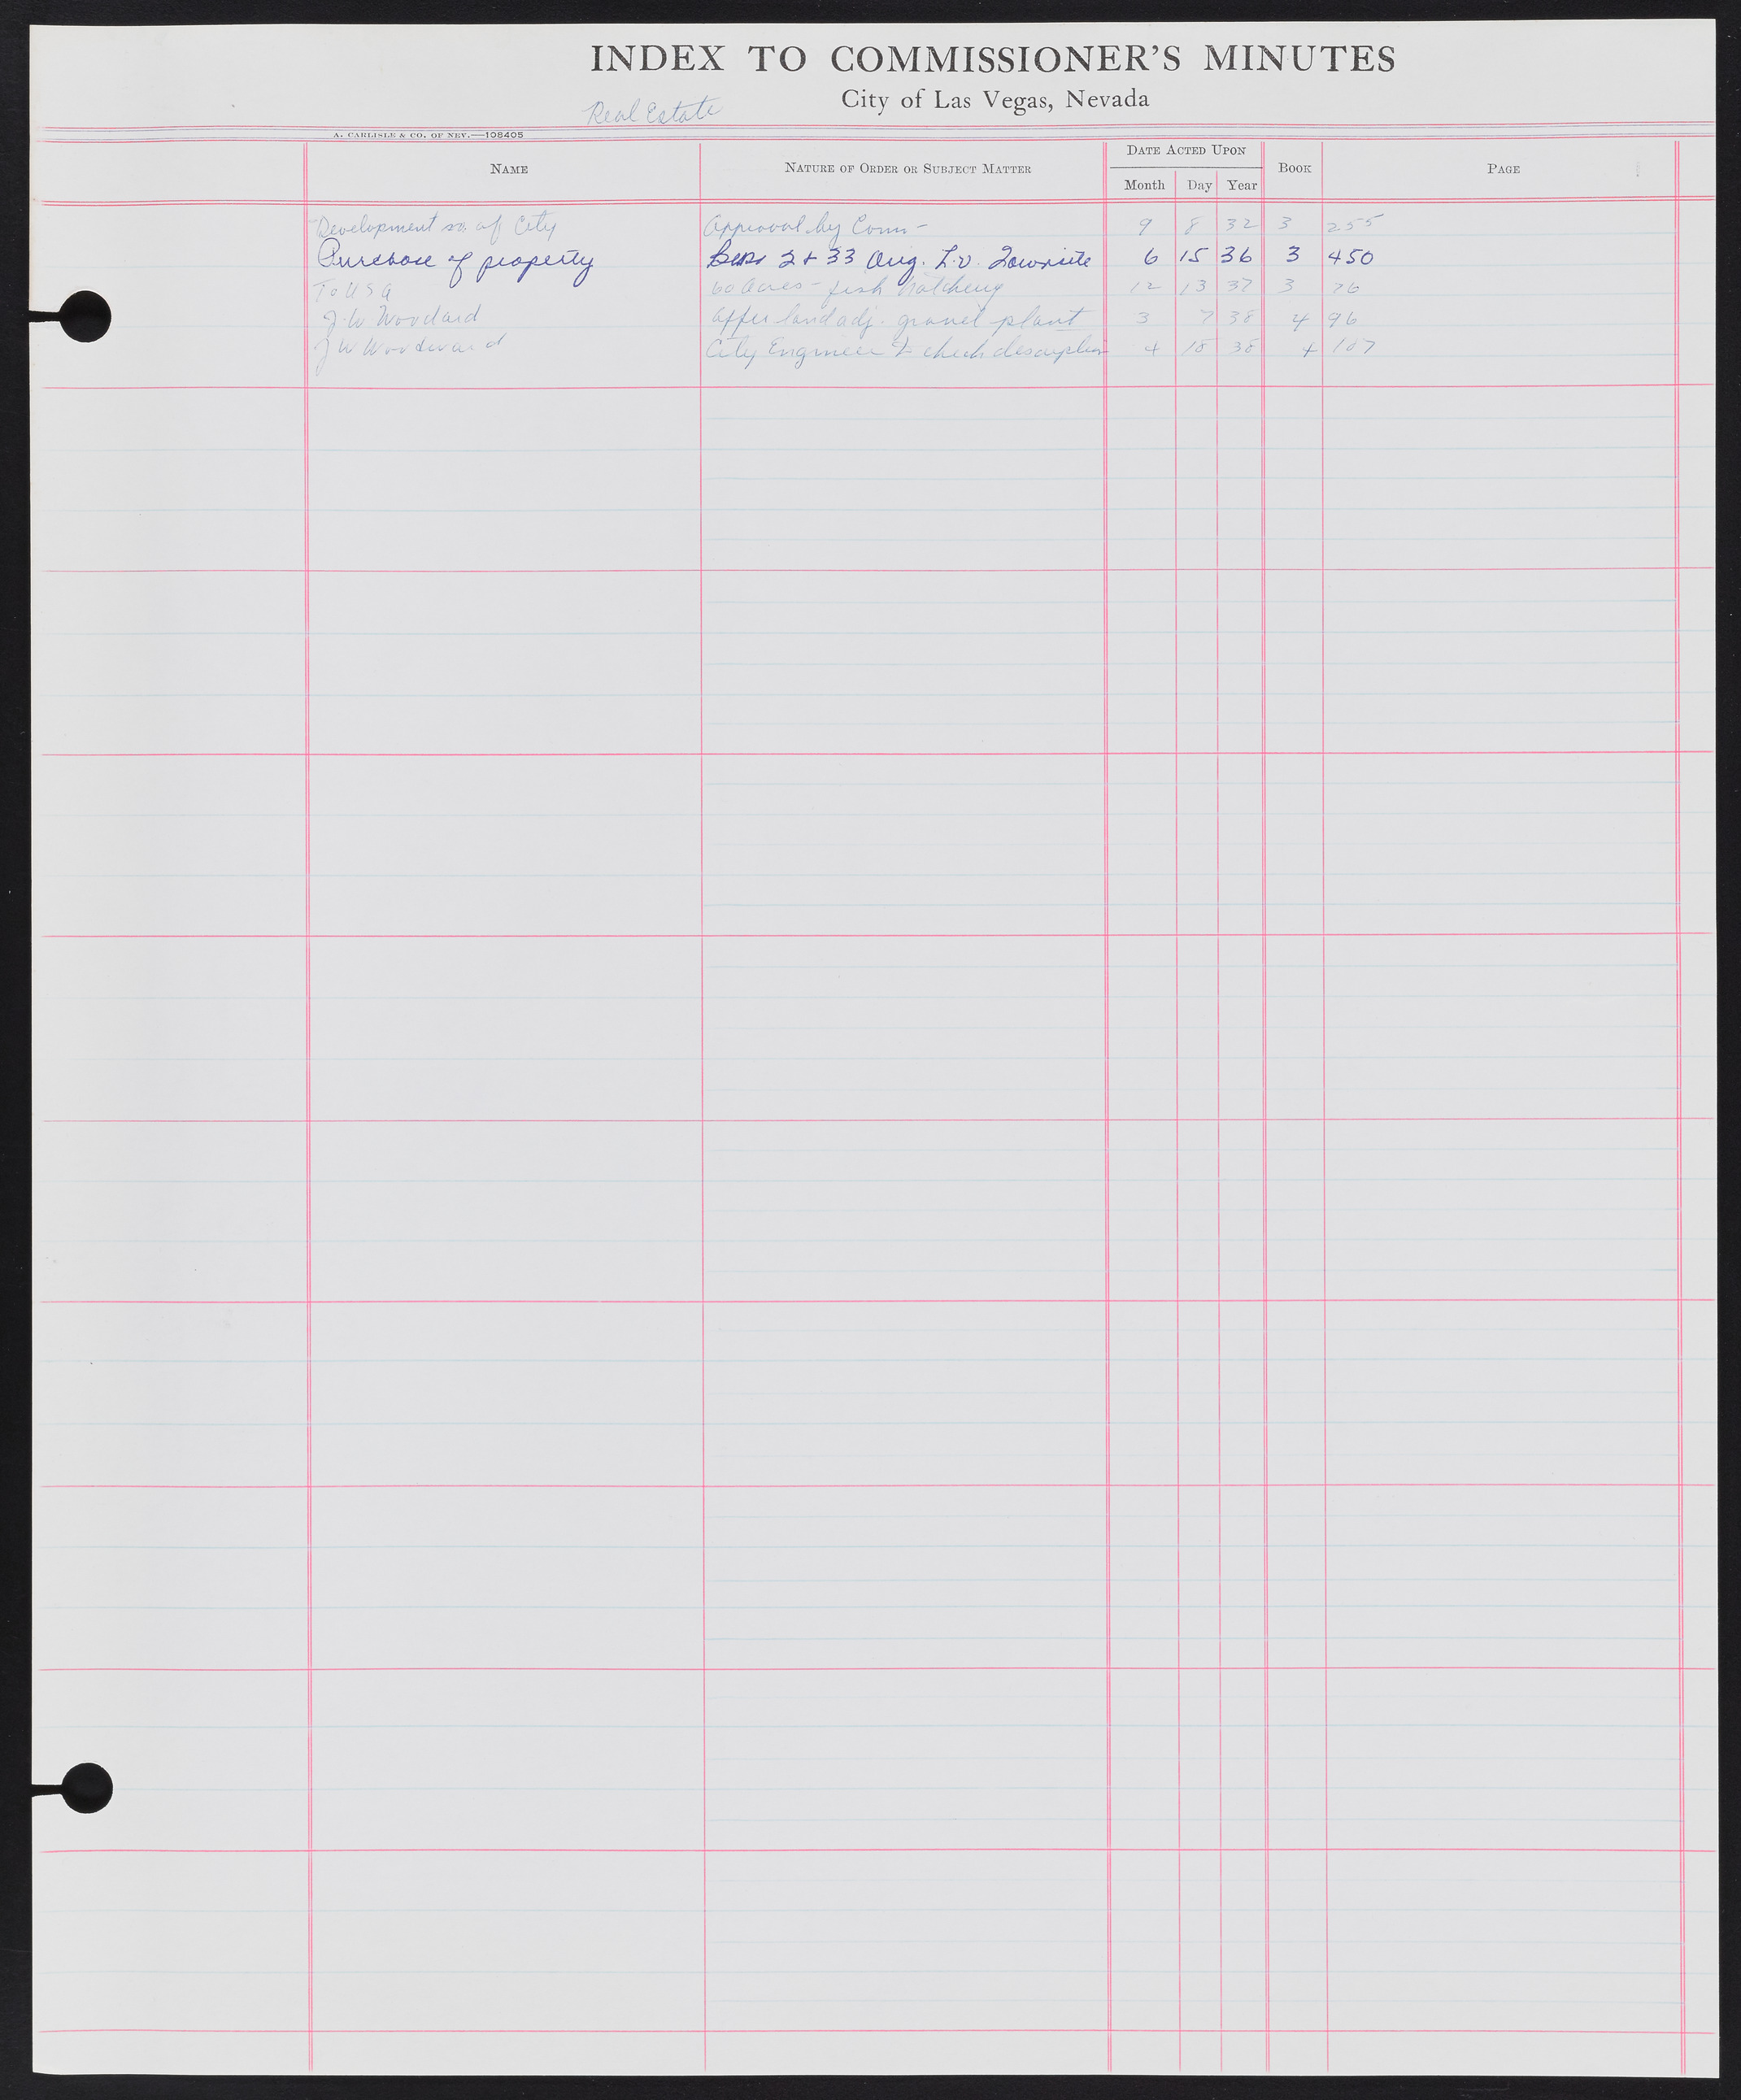 Las Vegas City Commission Minutes Index 1, 1911-1960: documents, item 240